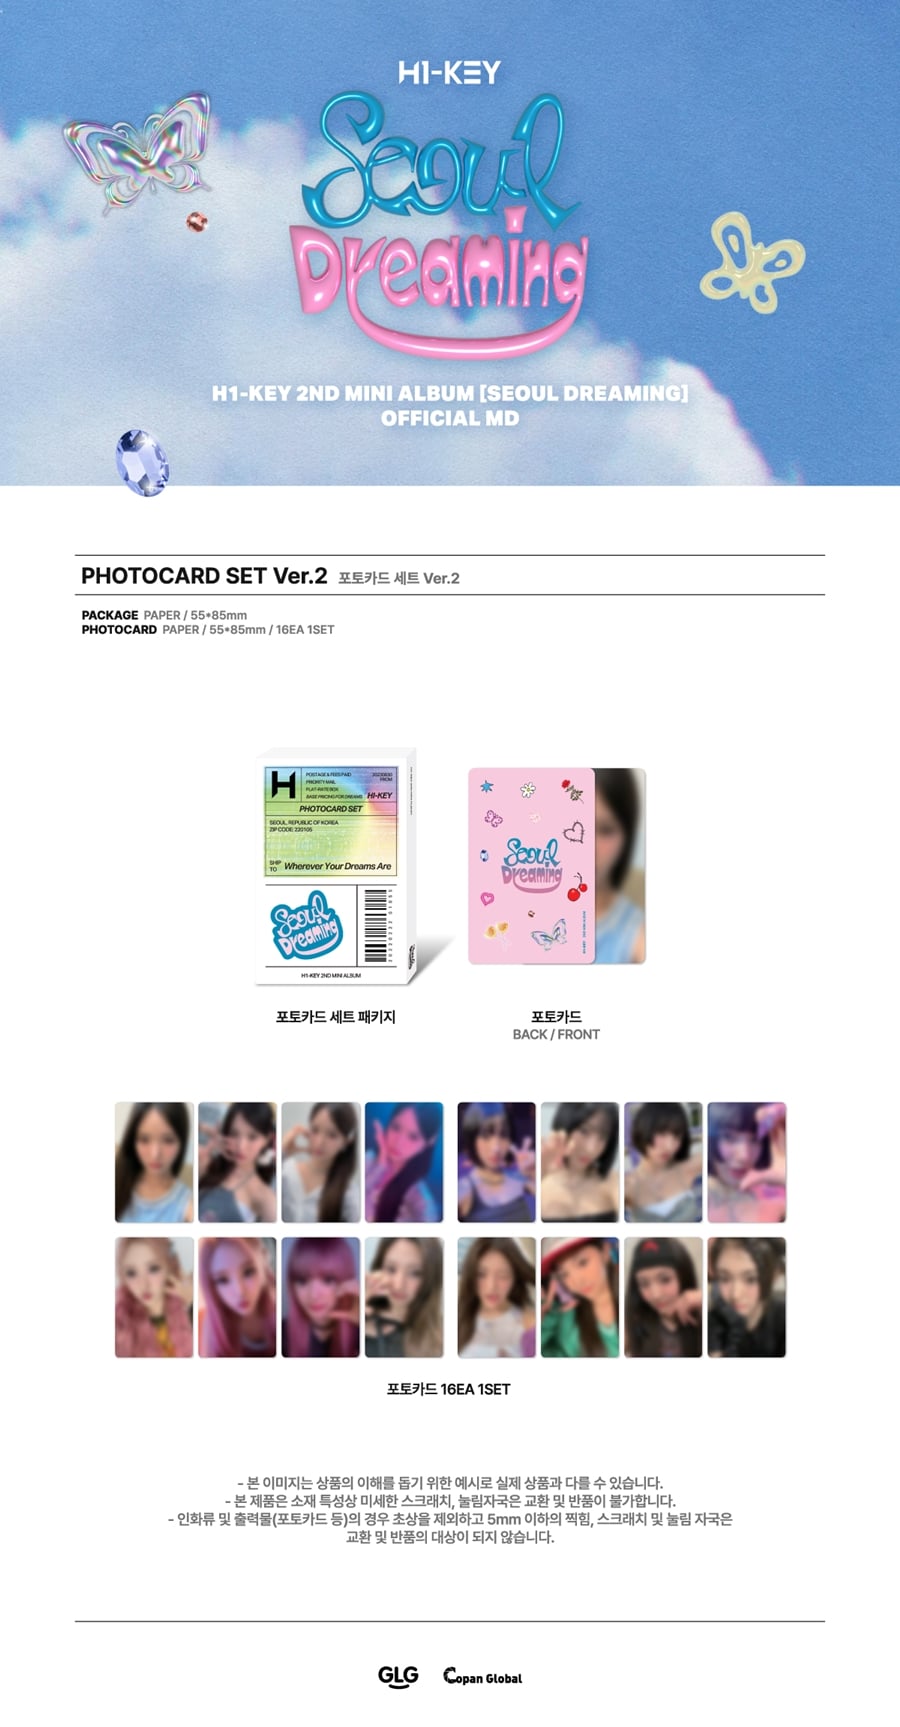 h1-key-02-photocard-set-ver-2-seoul-dreaming-md-wholesales